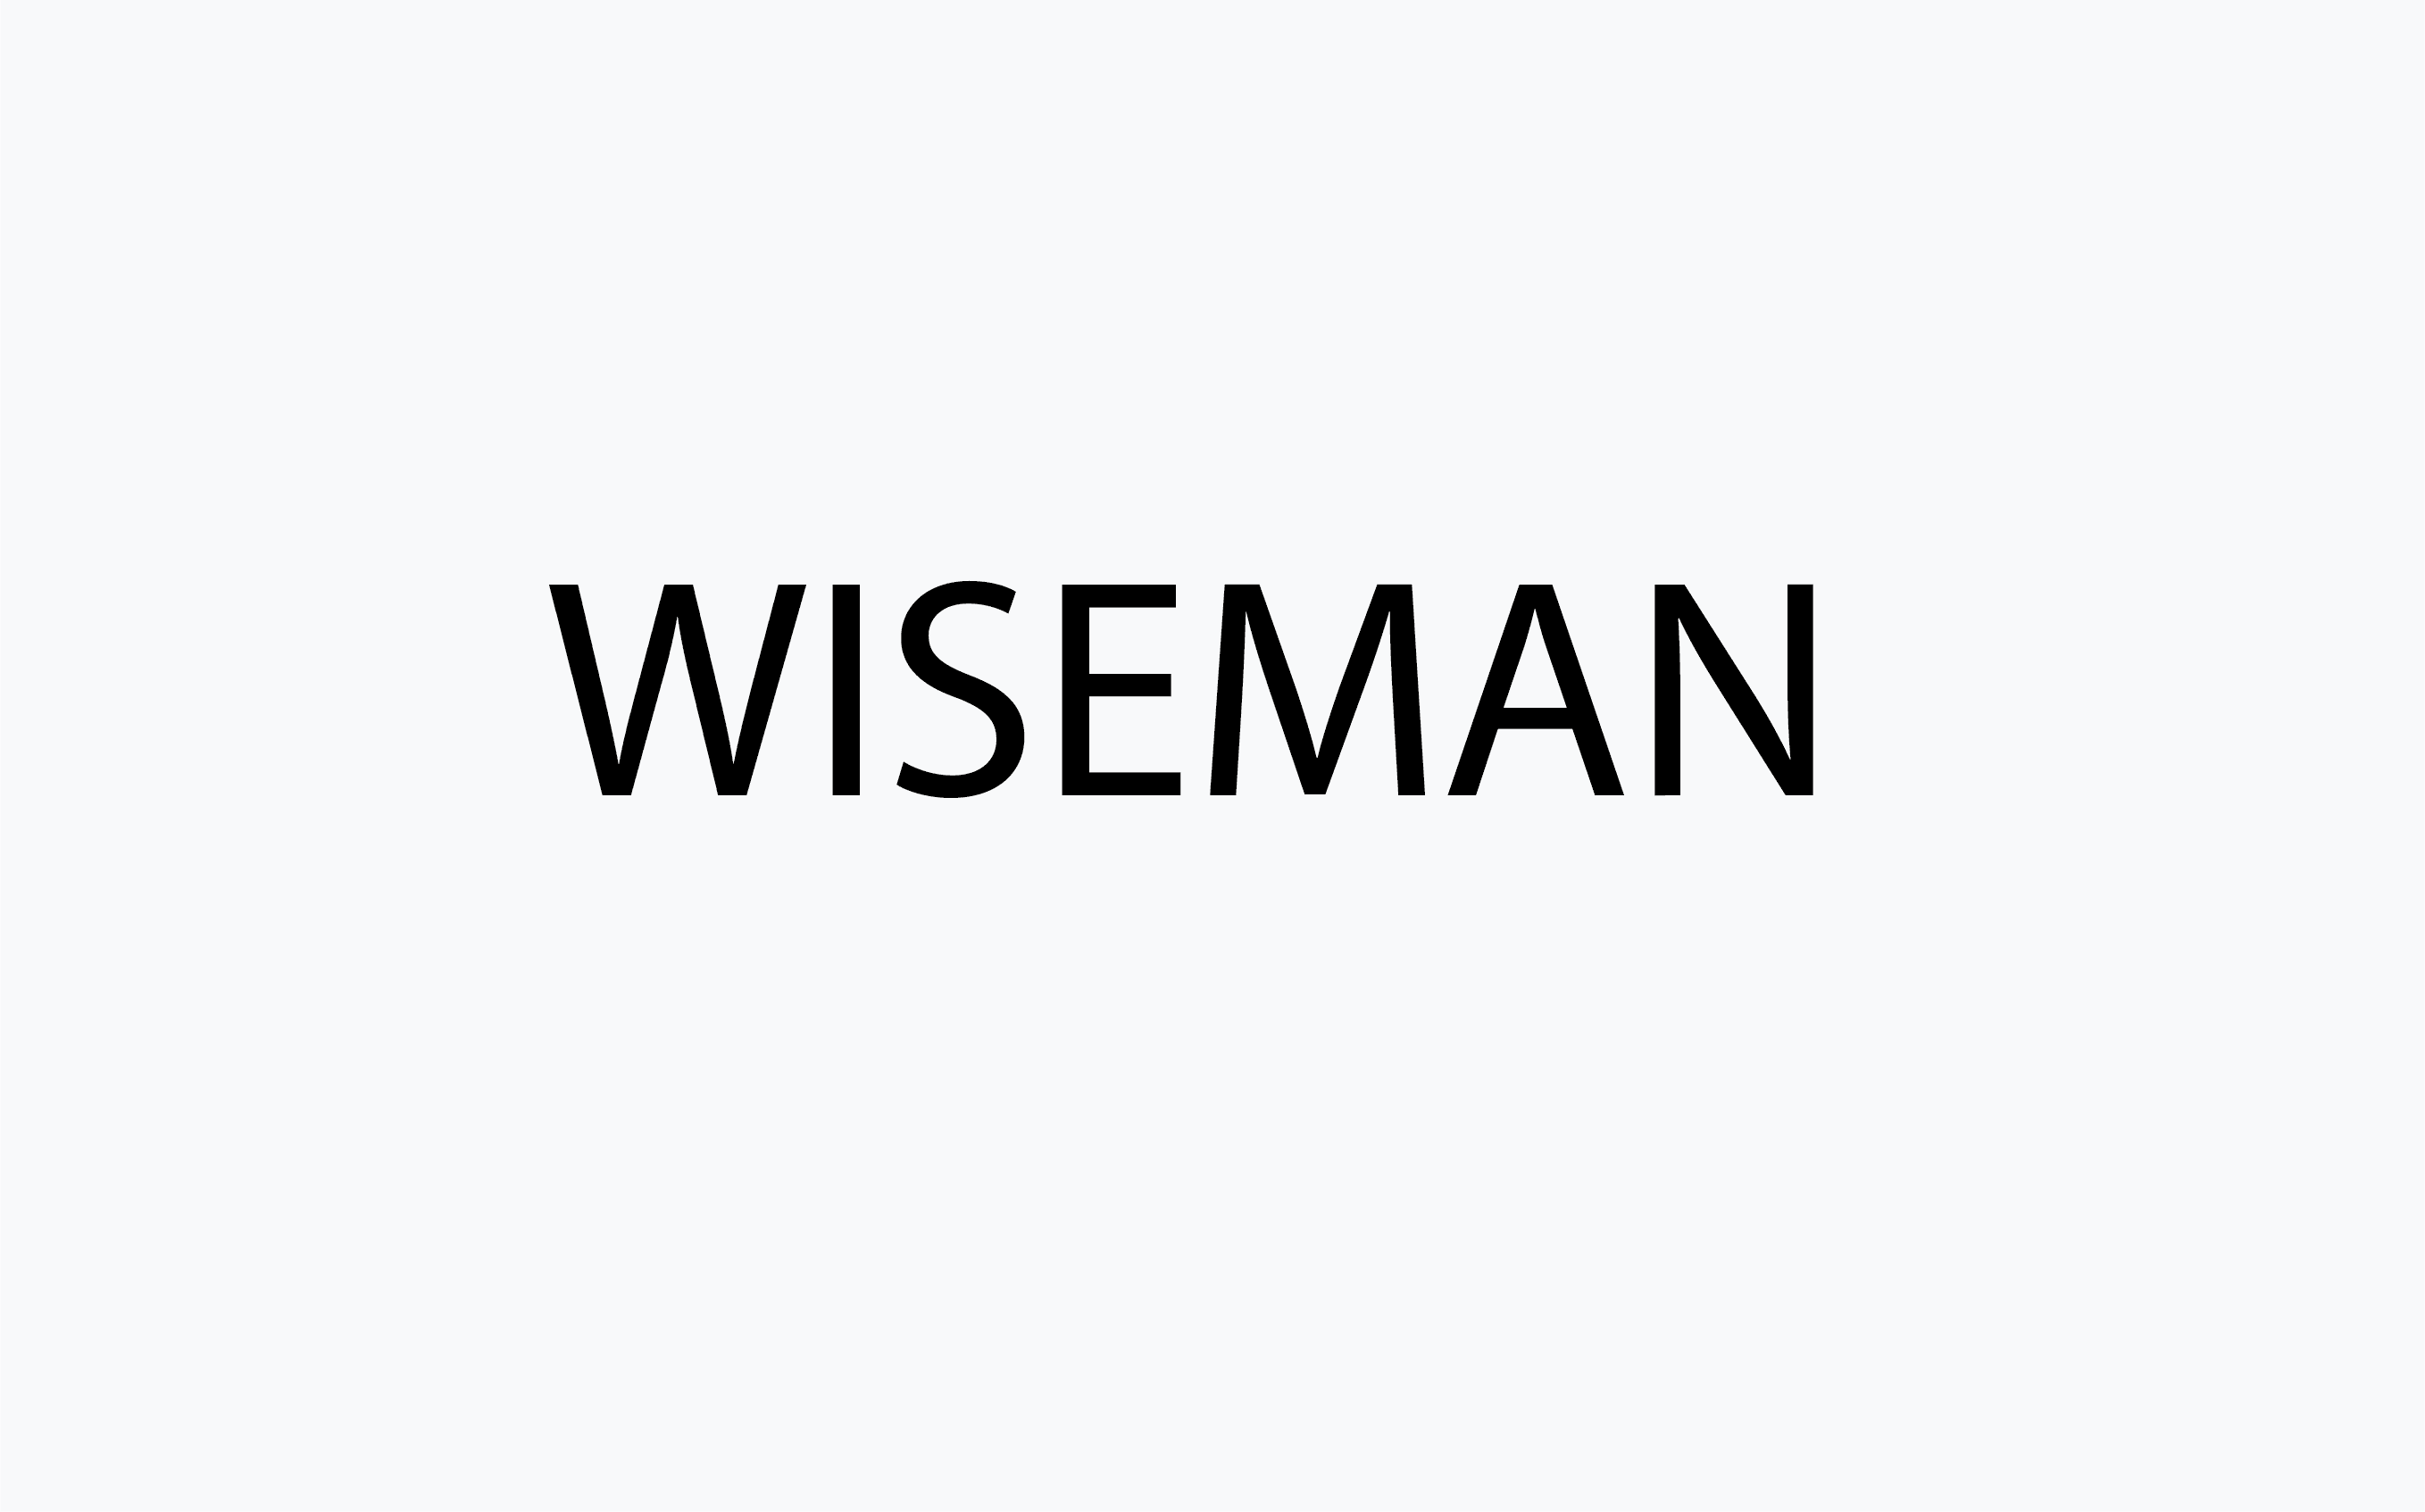 Wiseman category